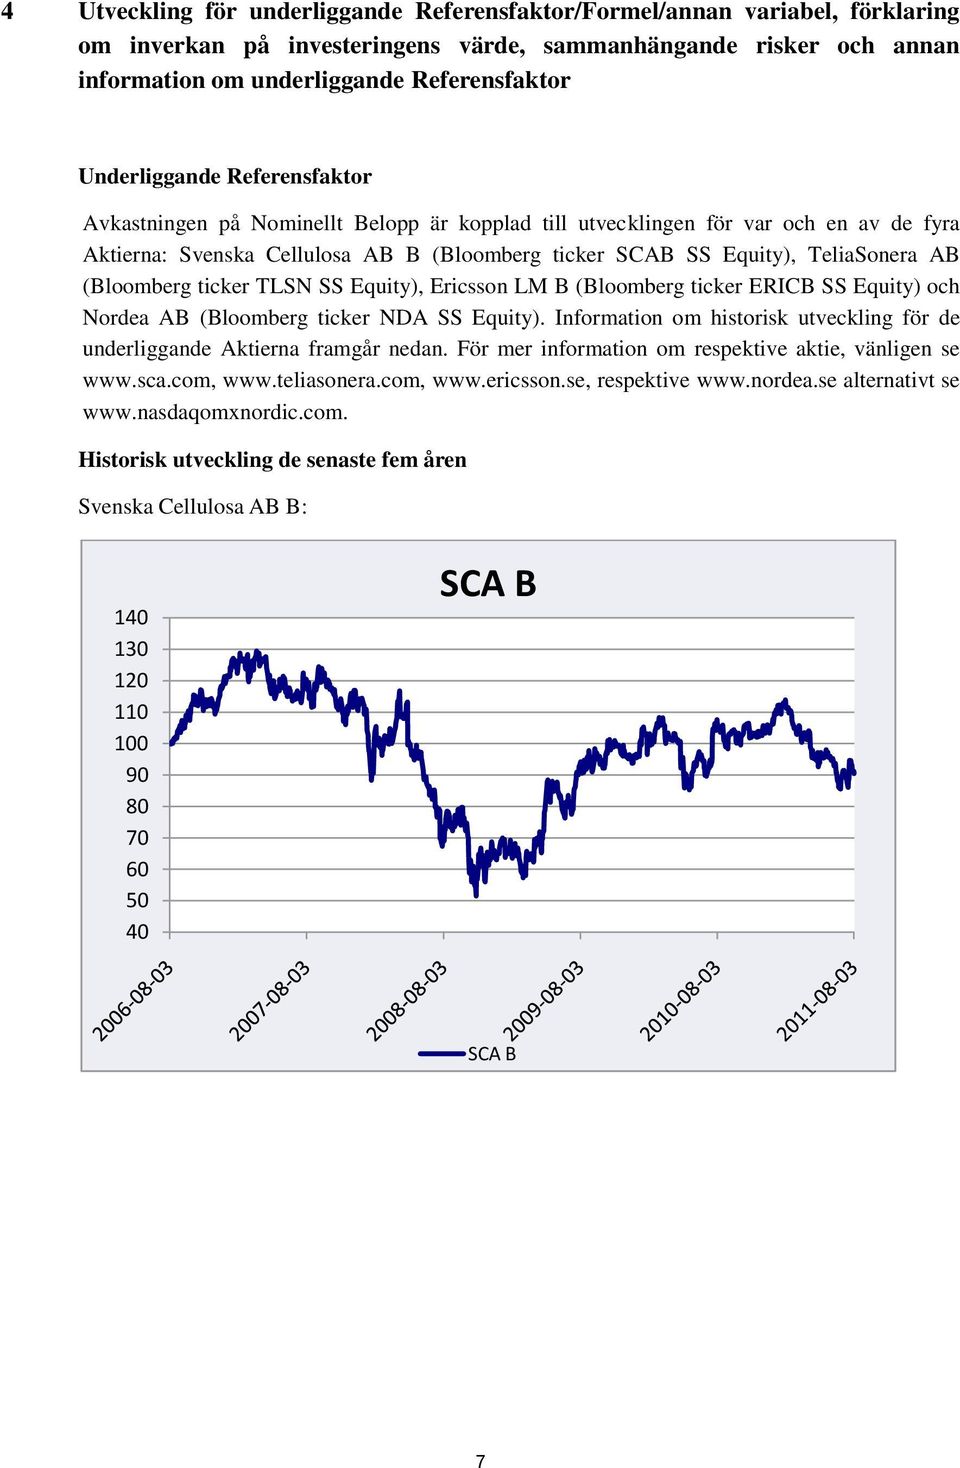 (Bloomberg ticker TLSN SS Equity), Ericsson LM B (Bloomberg ticker ERICB SS Equity) och Nordea AB (Bloomberg ticker NDA SS Equity).